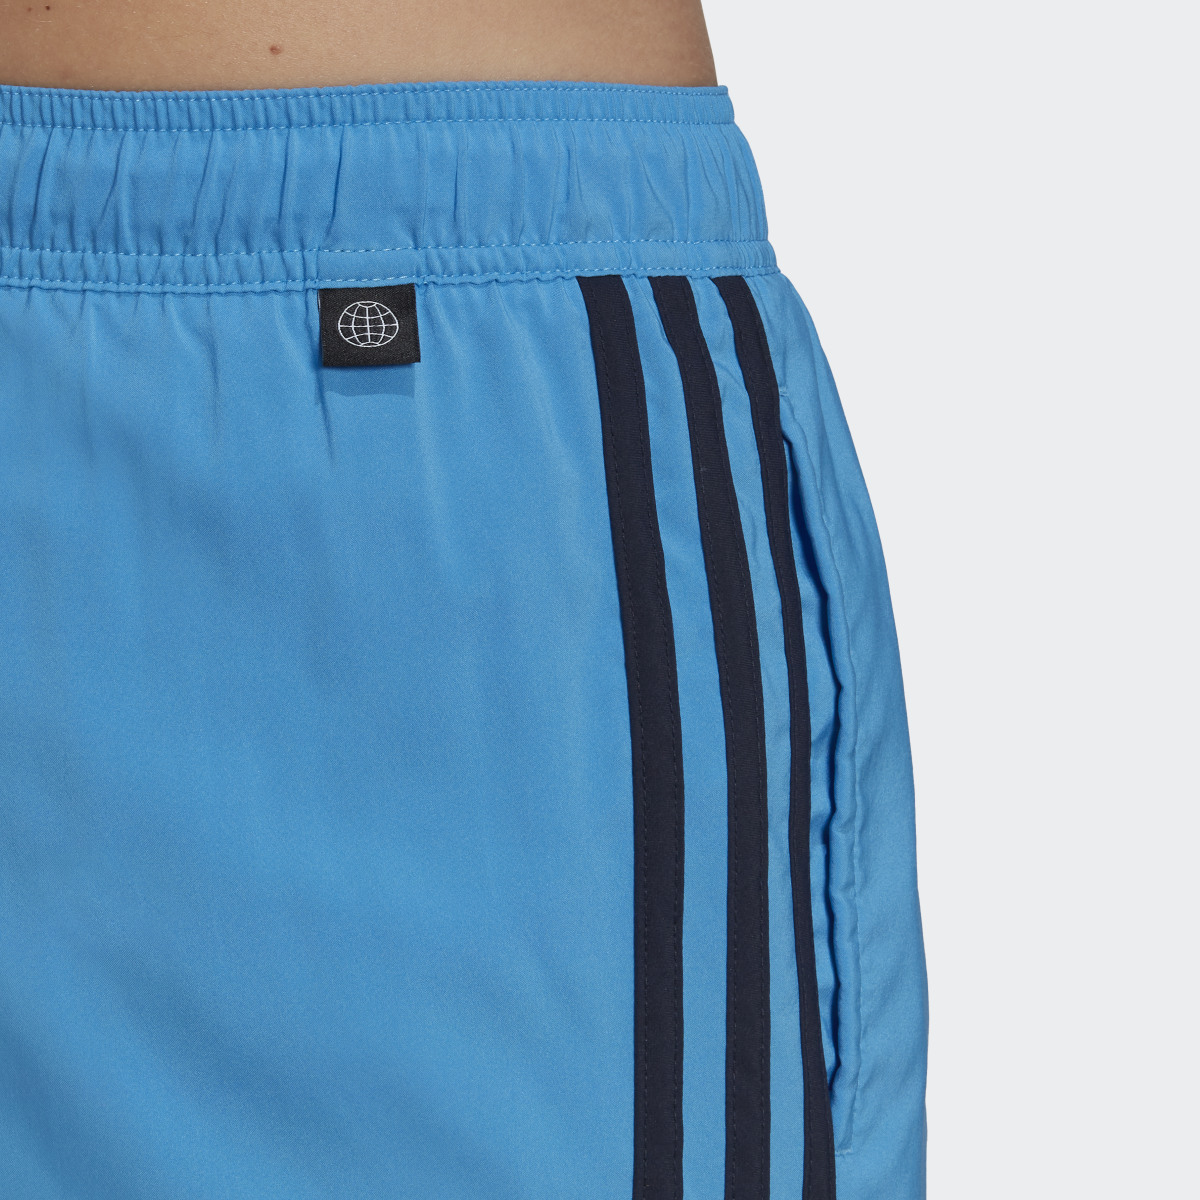 Adidas Classic-Length 3-Streifen Badeshorts. 6